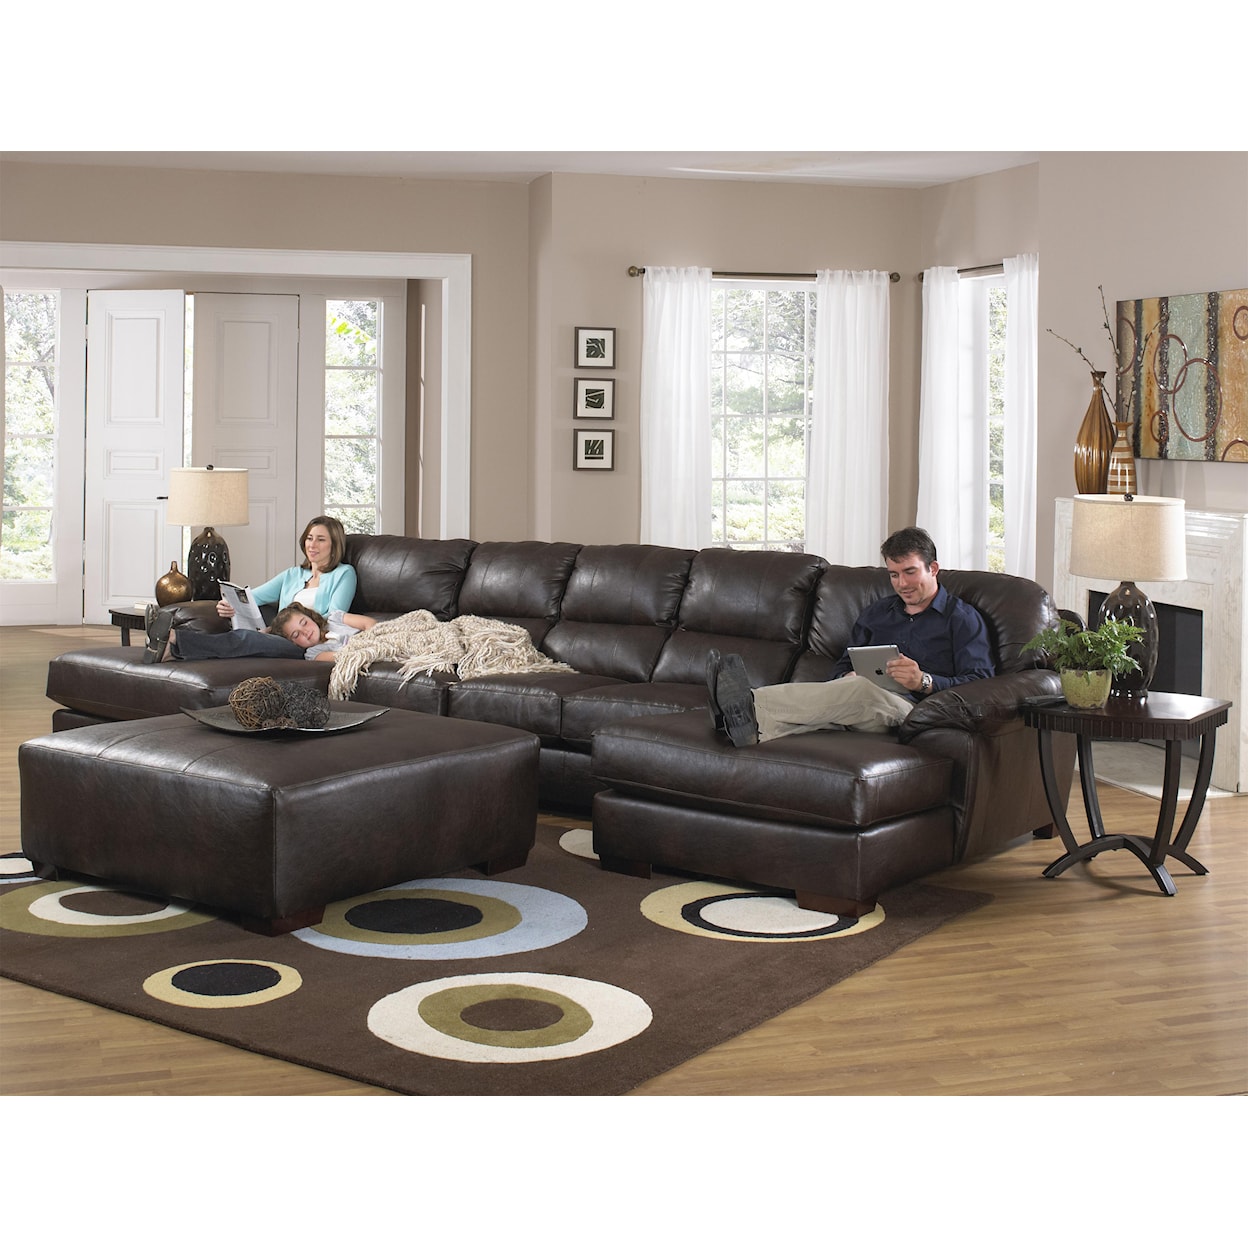 Jackson Furniture 4243 Lawson 3-Piece Sectional